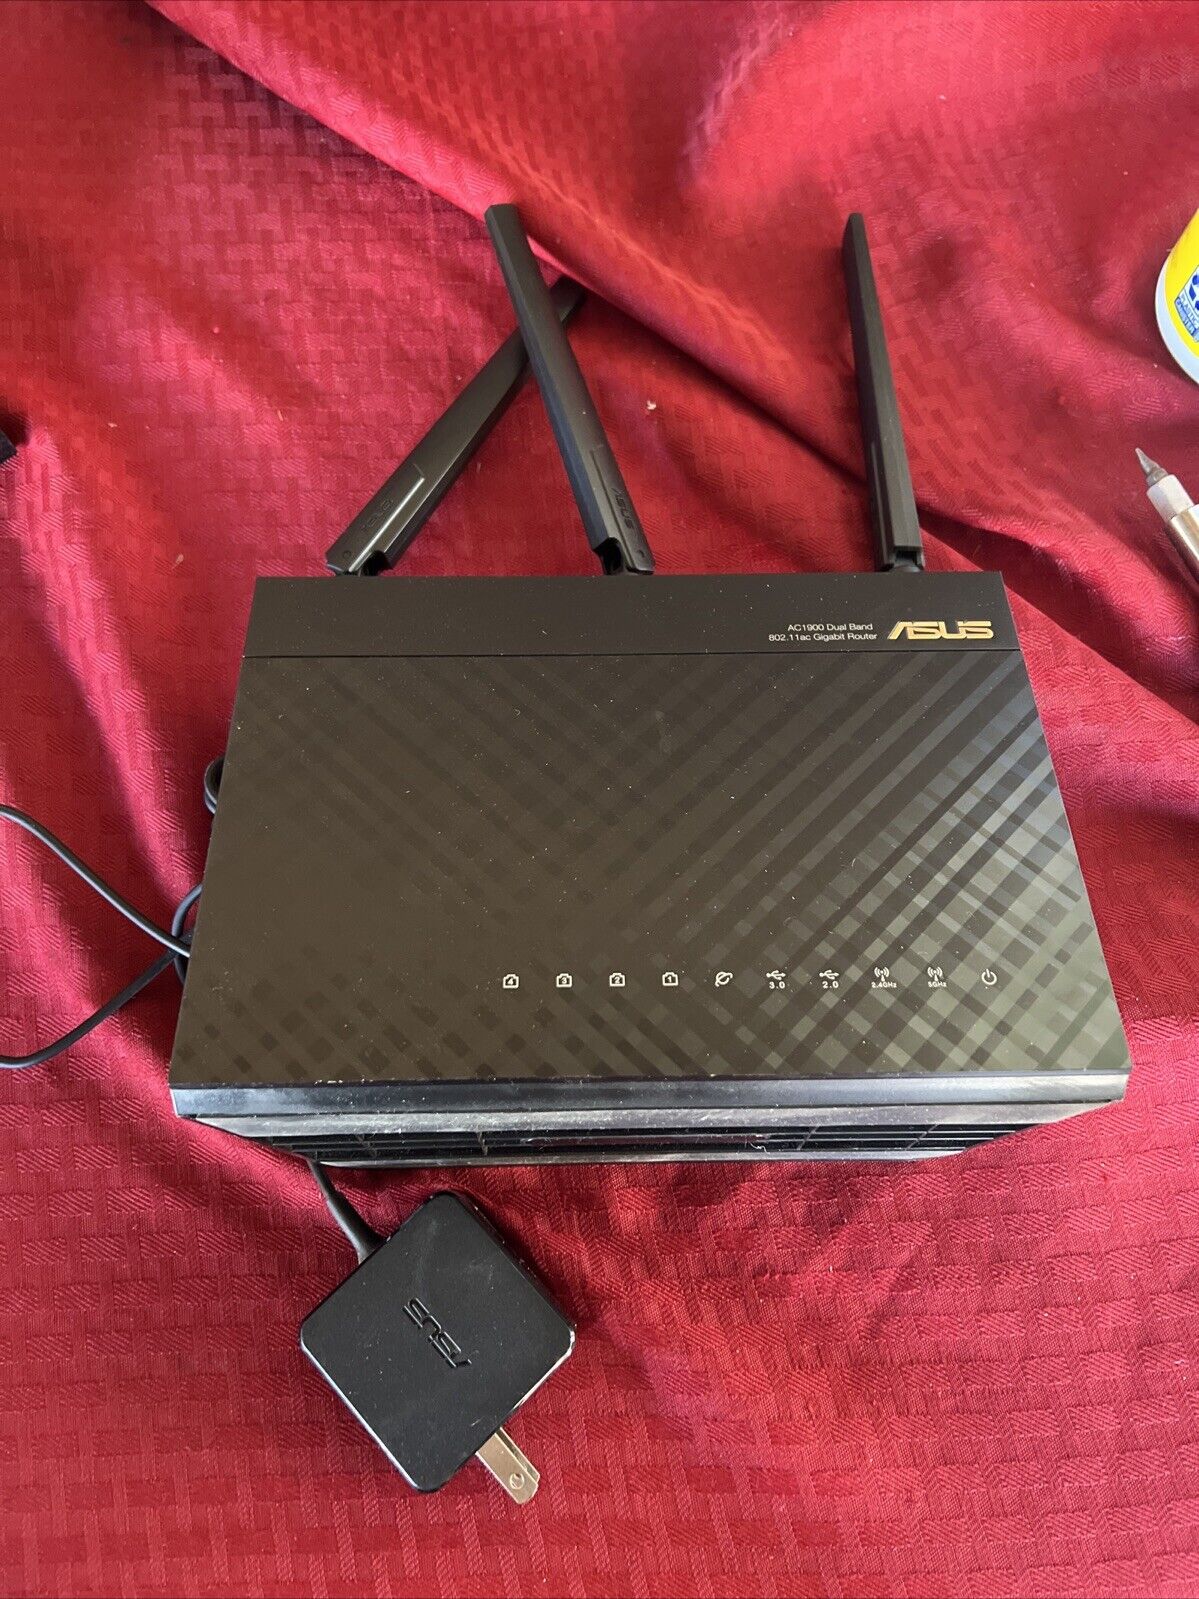 ASUS RT-AC1900P Performance Wi-Fi Router Dual Band Gigabit - 